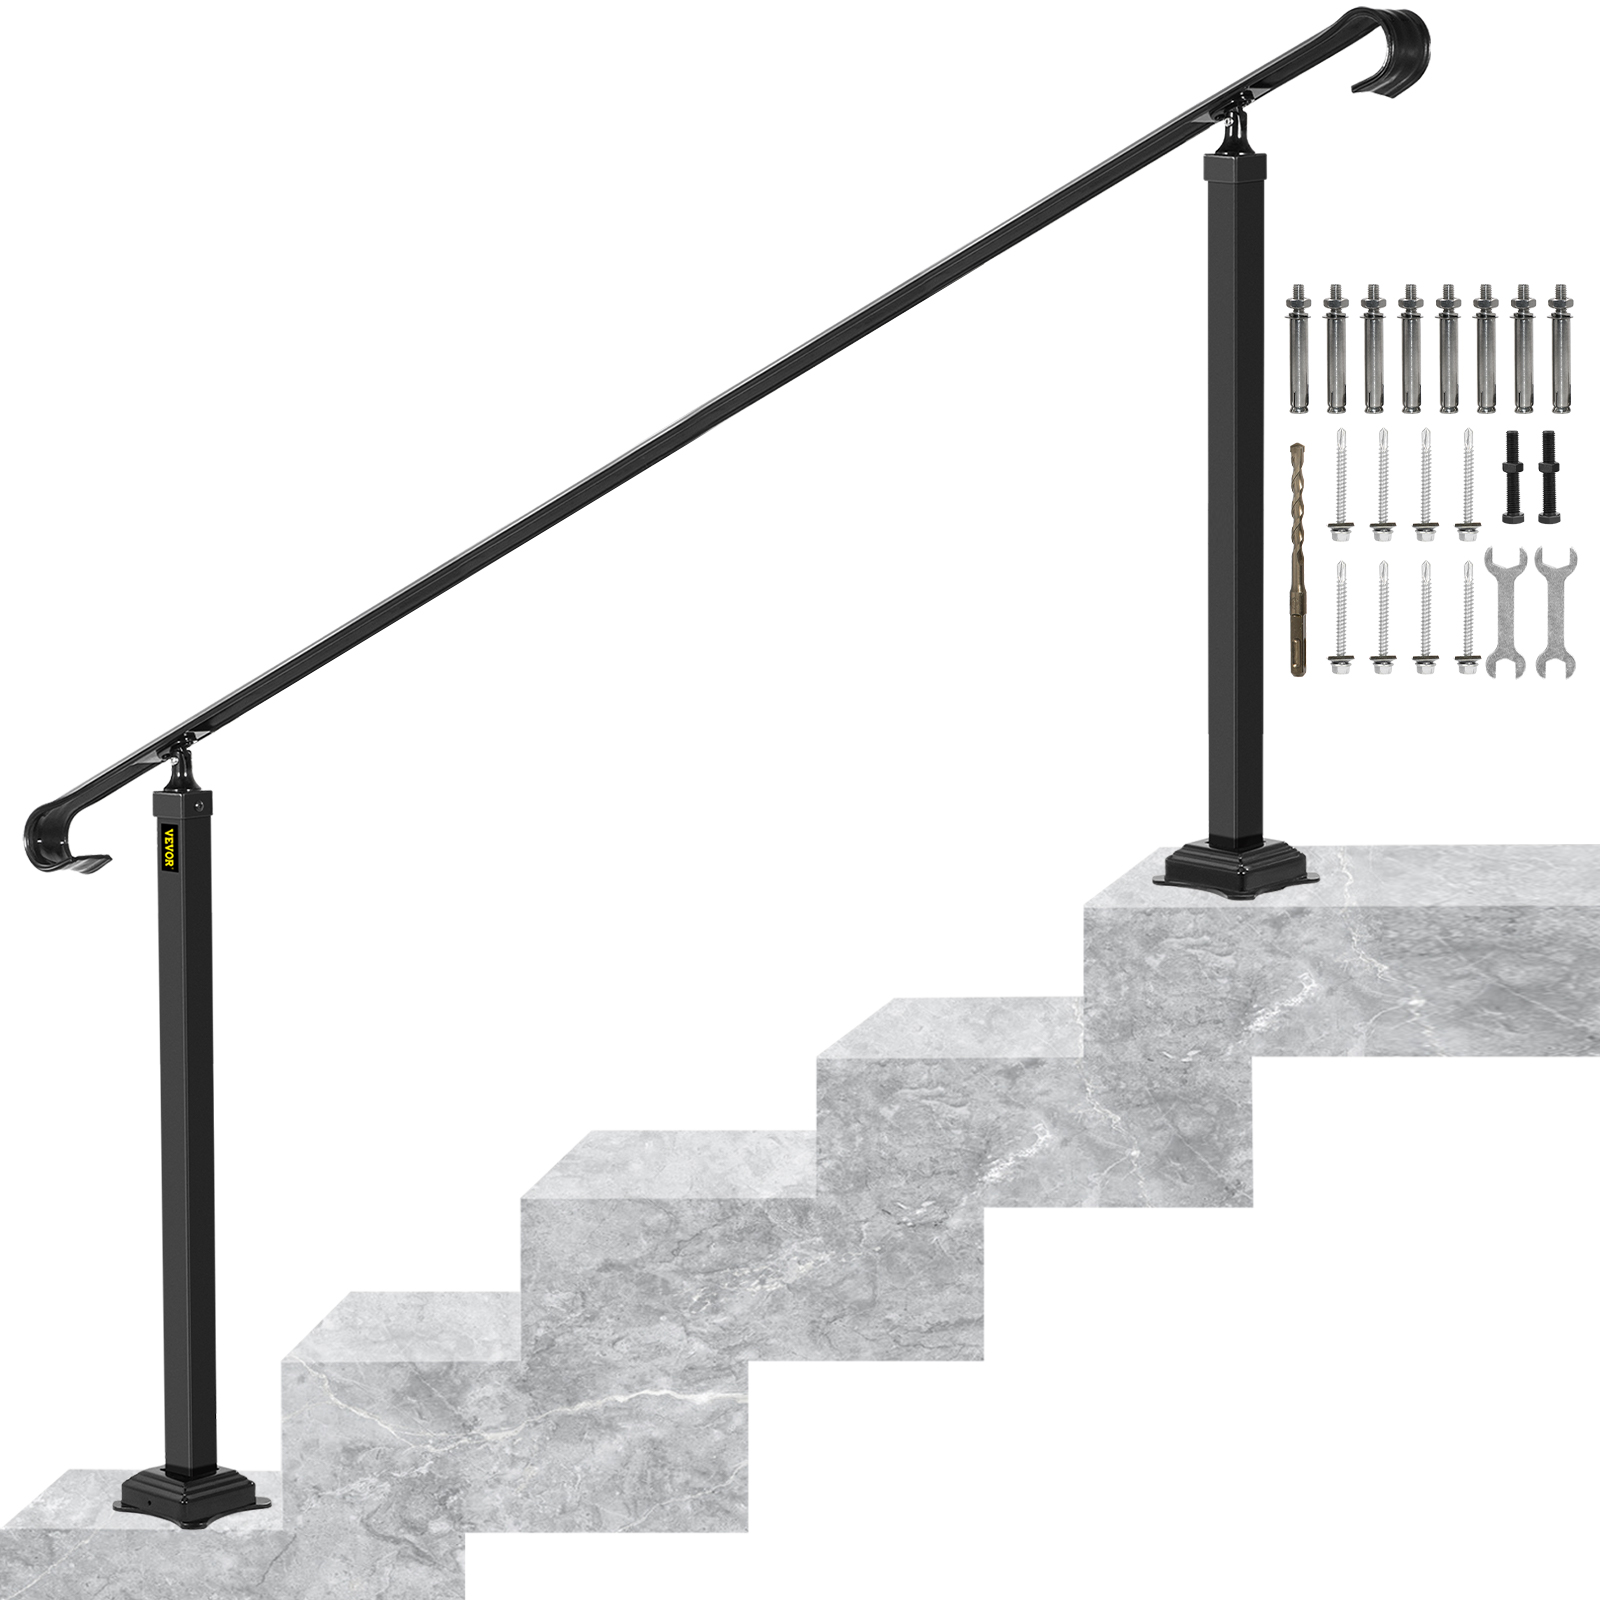 Vevor Wrought Iron Handrail Stair Railing Fit 5 To 7 Stepsadjustable Hand Rail от Vevor Many GEOs